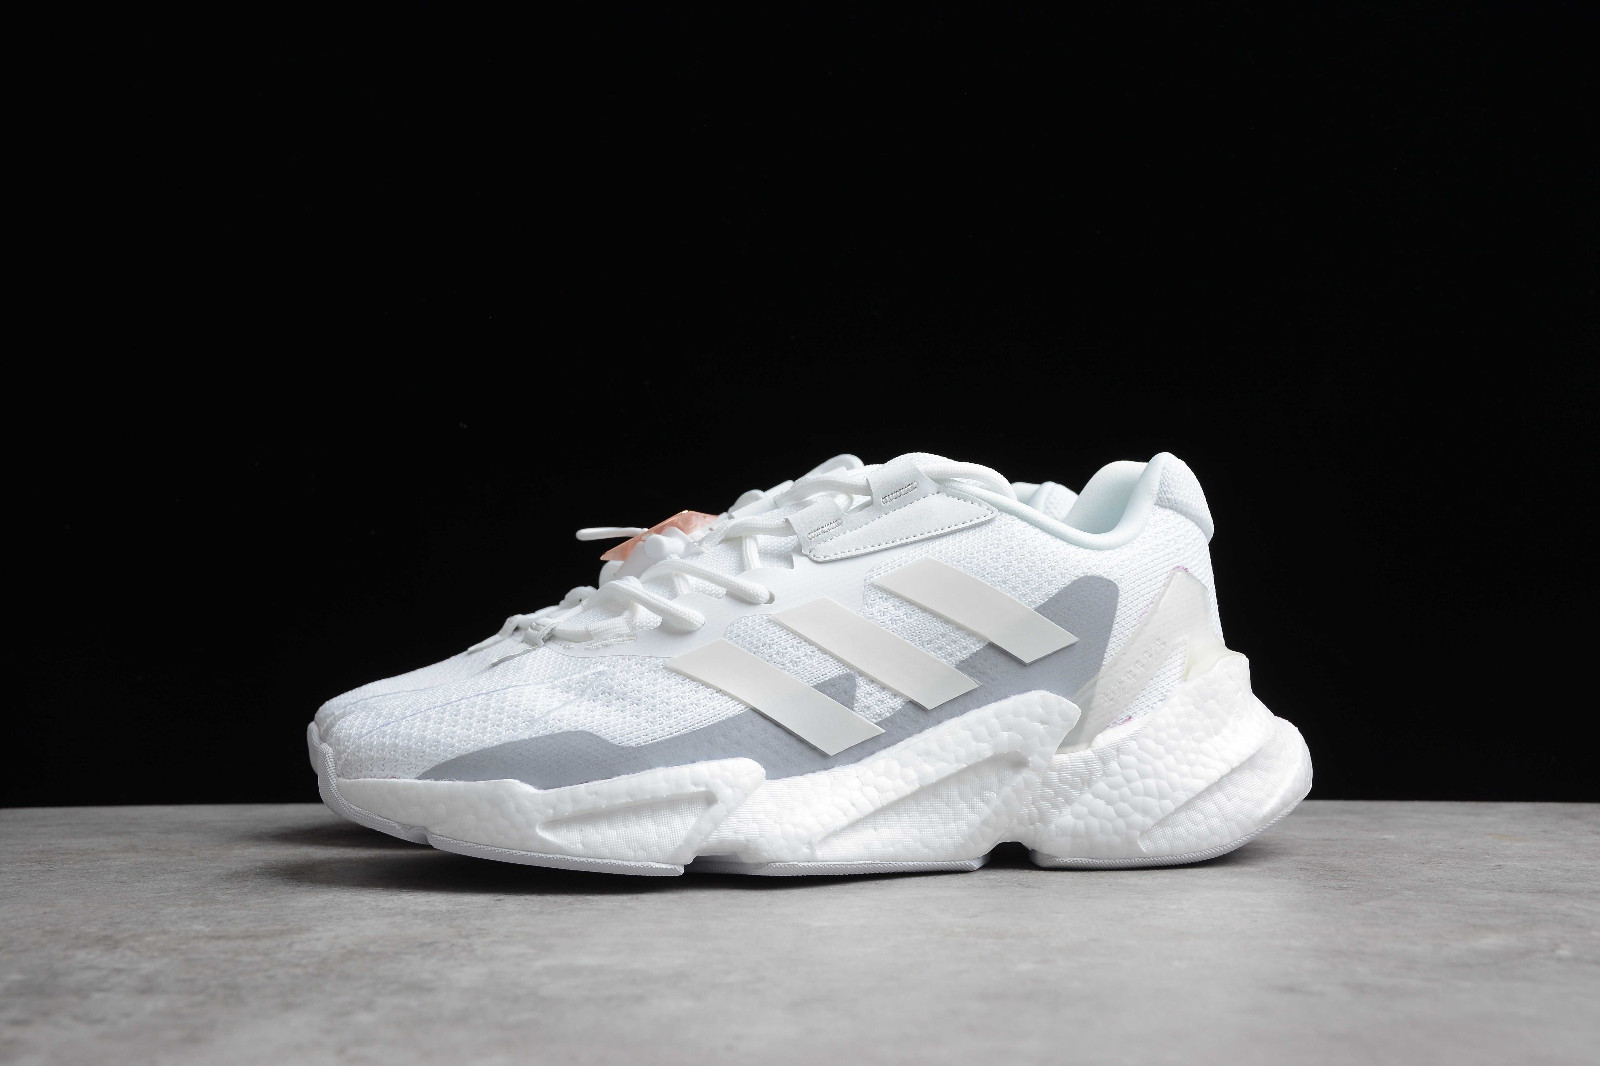 Adidas x Atmos Campus Supreme Core Black Core White IF5902 Men's Shoes  Sneakers